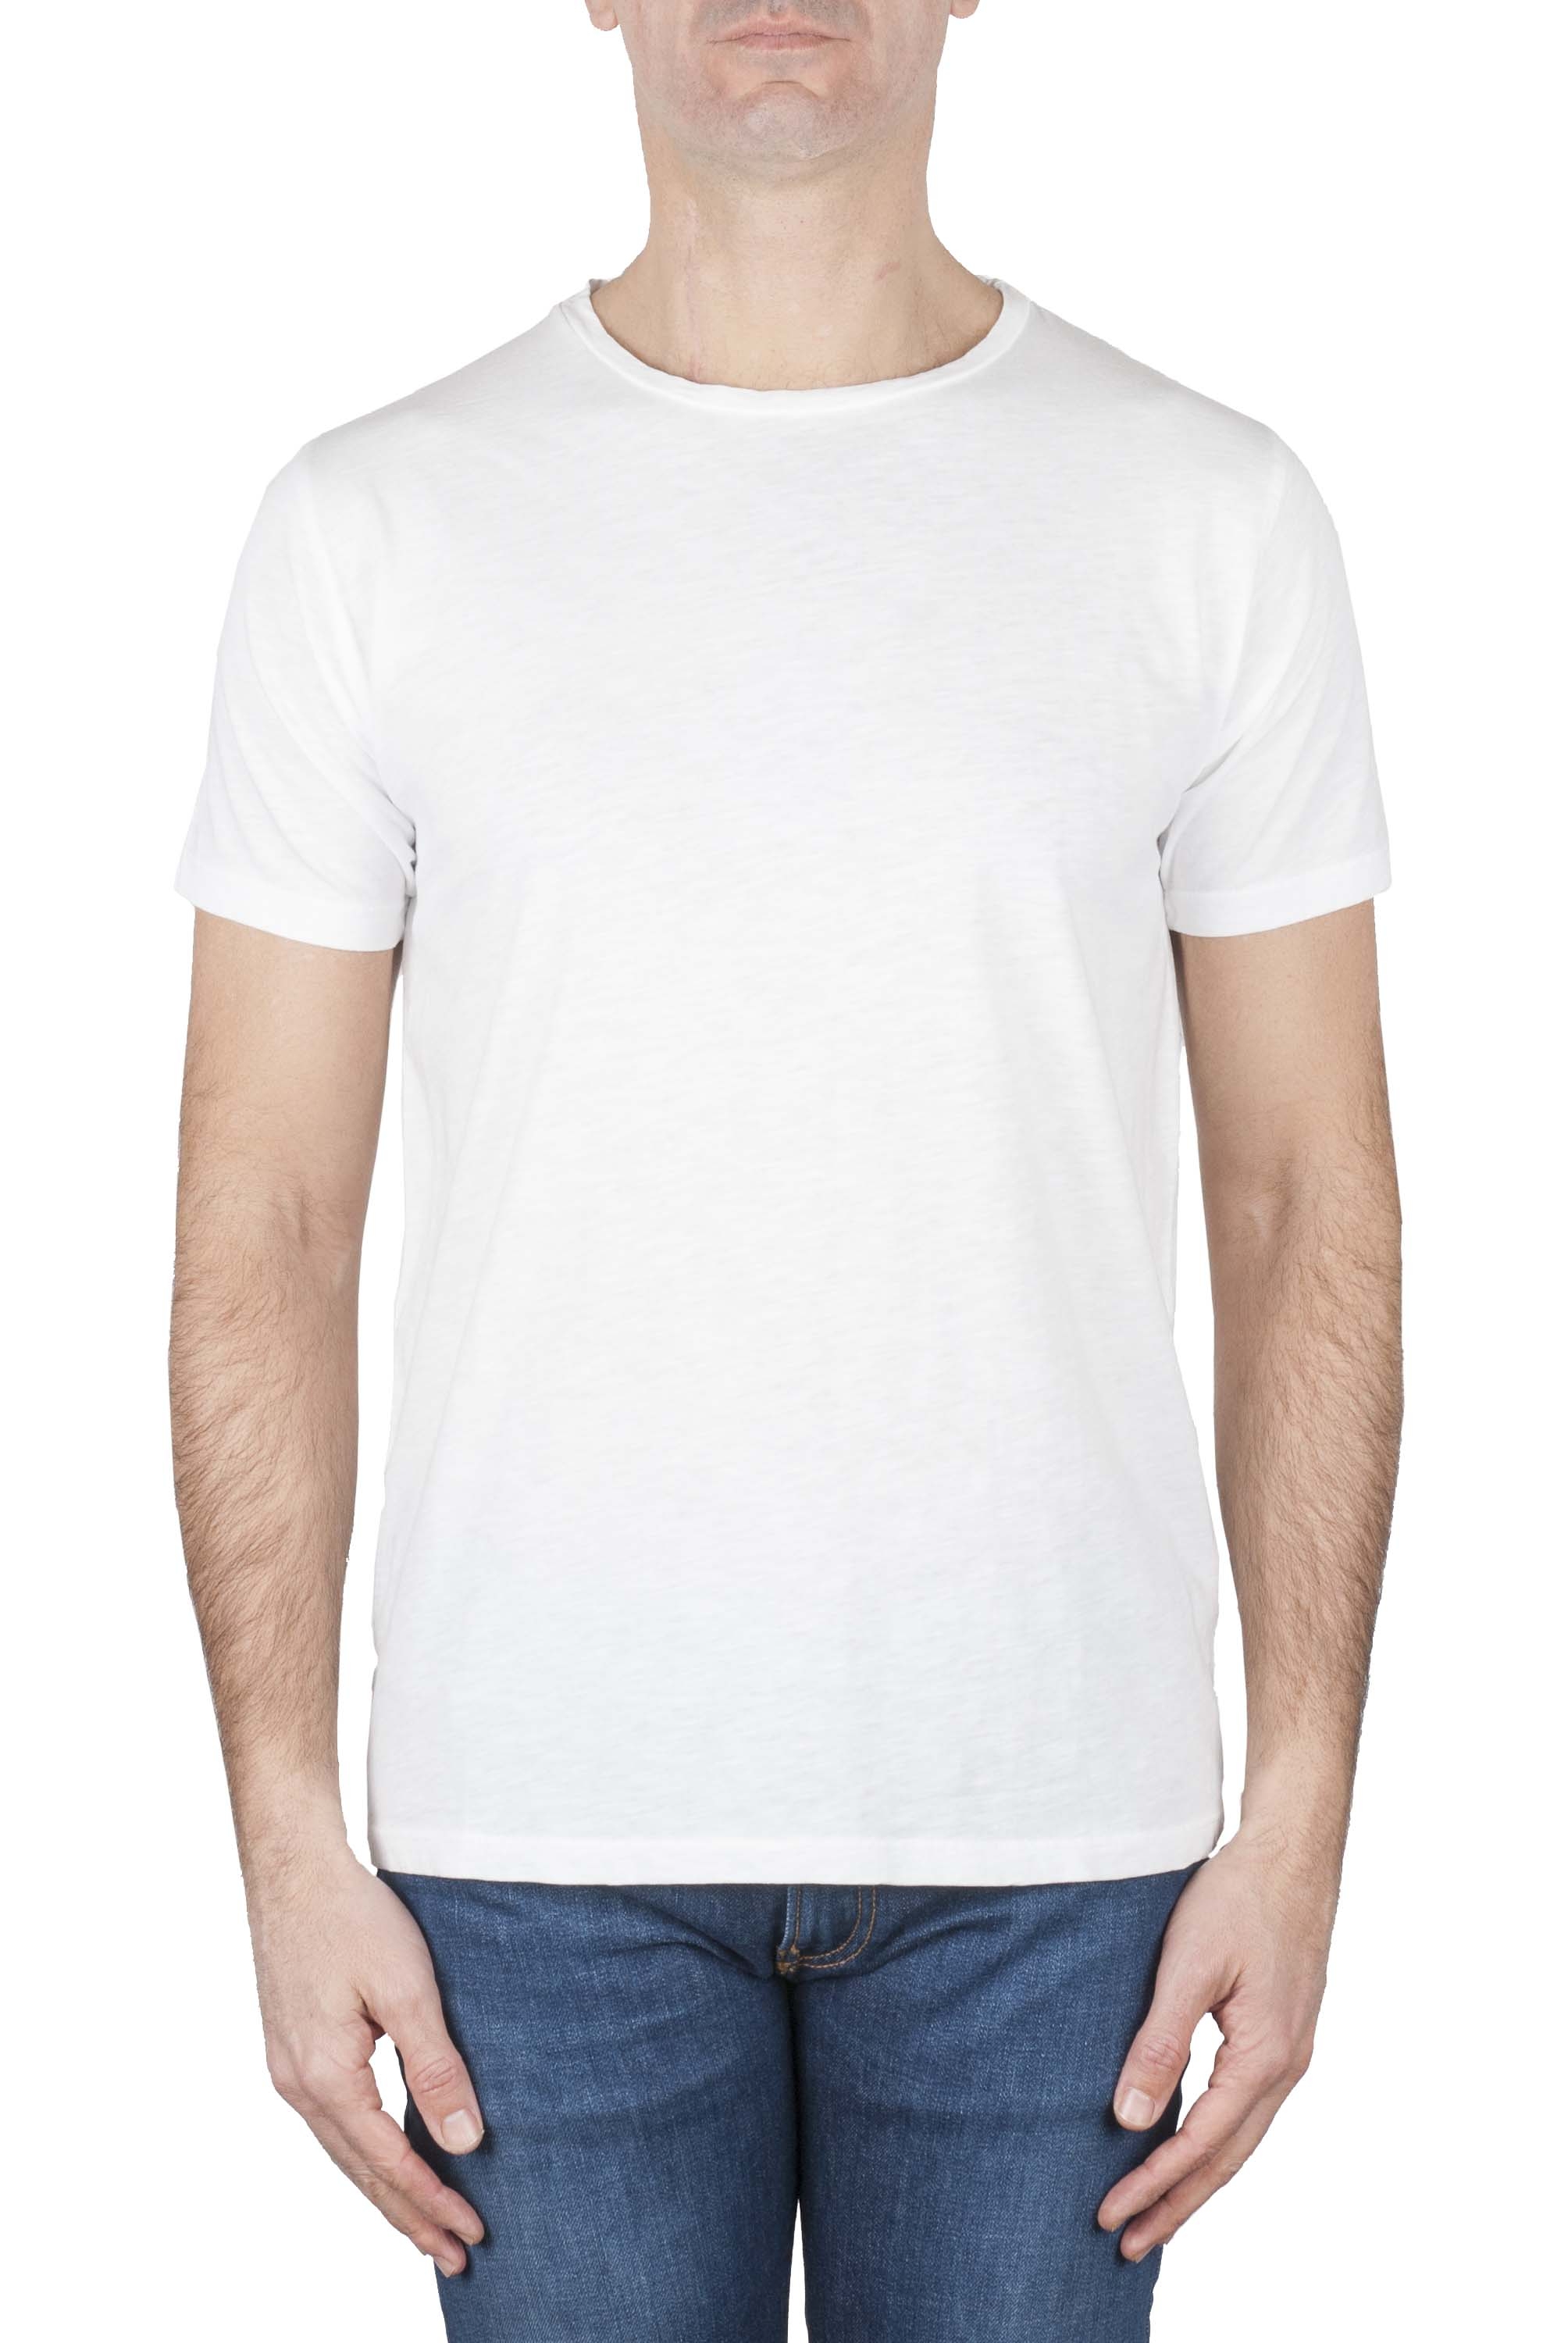 SBU 01637 Flamed cotton scoop neck t-shirt white 01